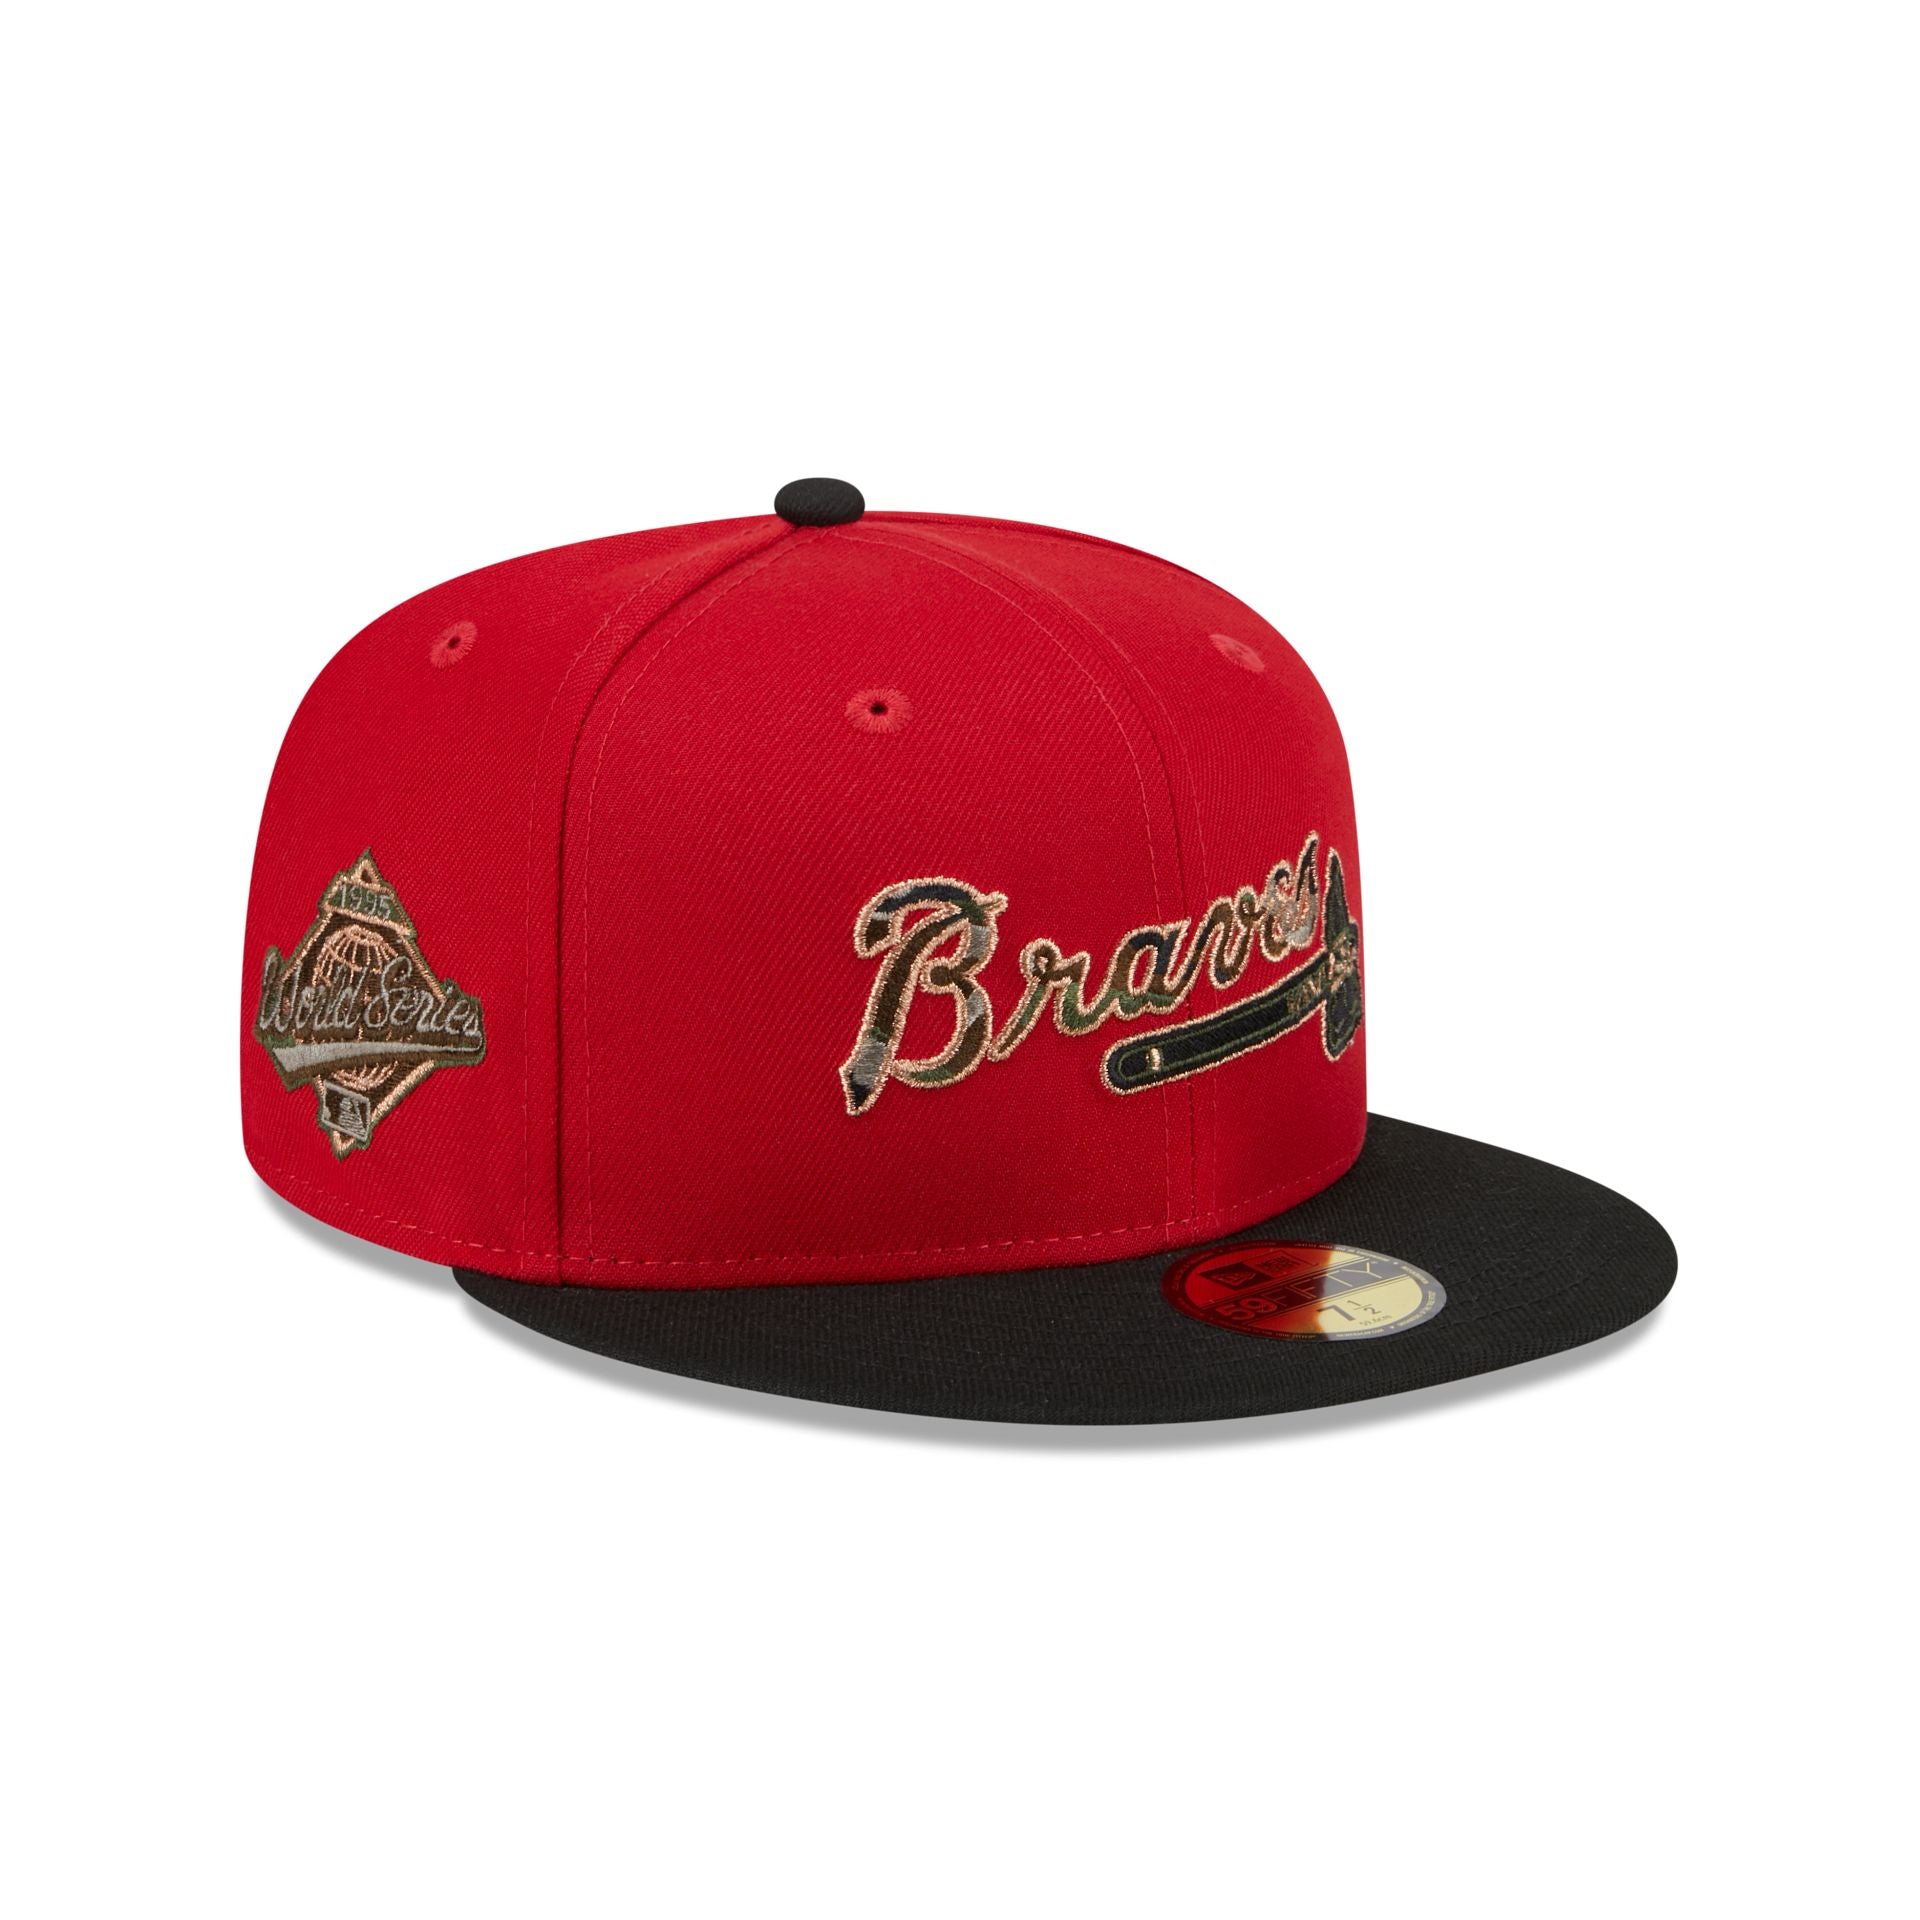 Atlanta Braves Camo Hat MLB NEW Snap Back Adjustable